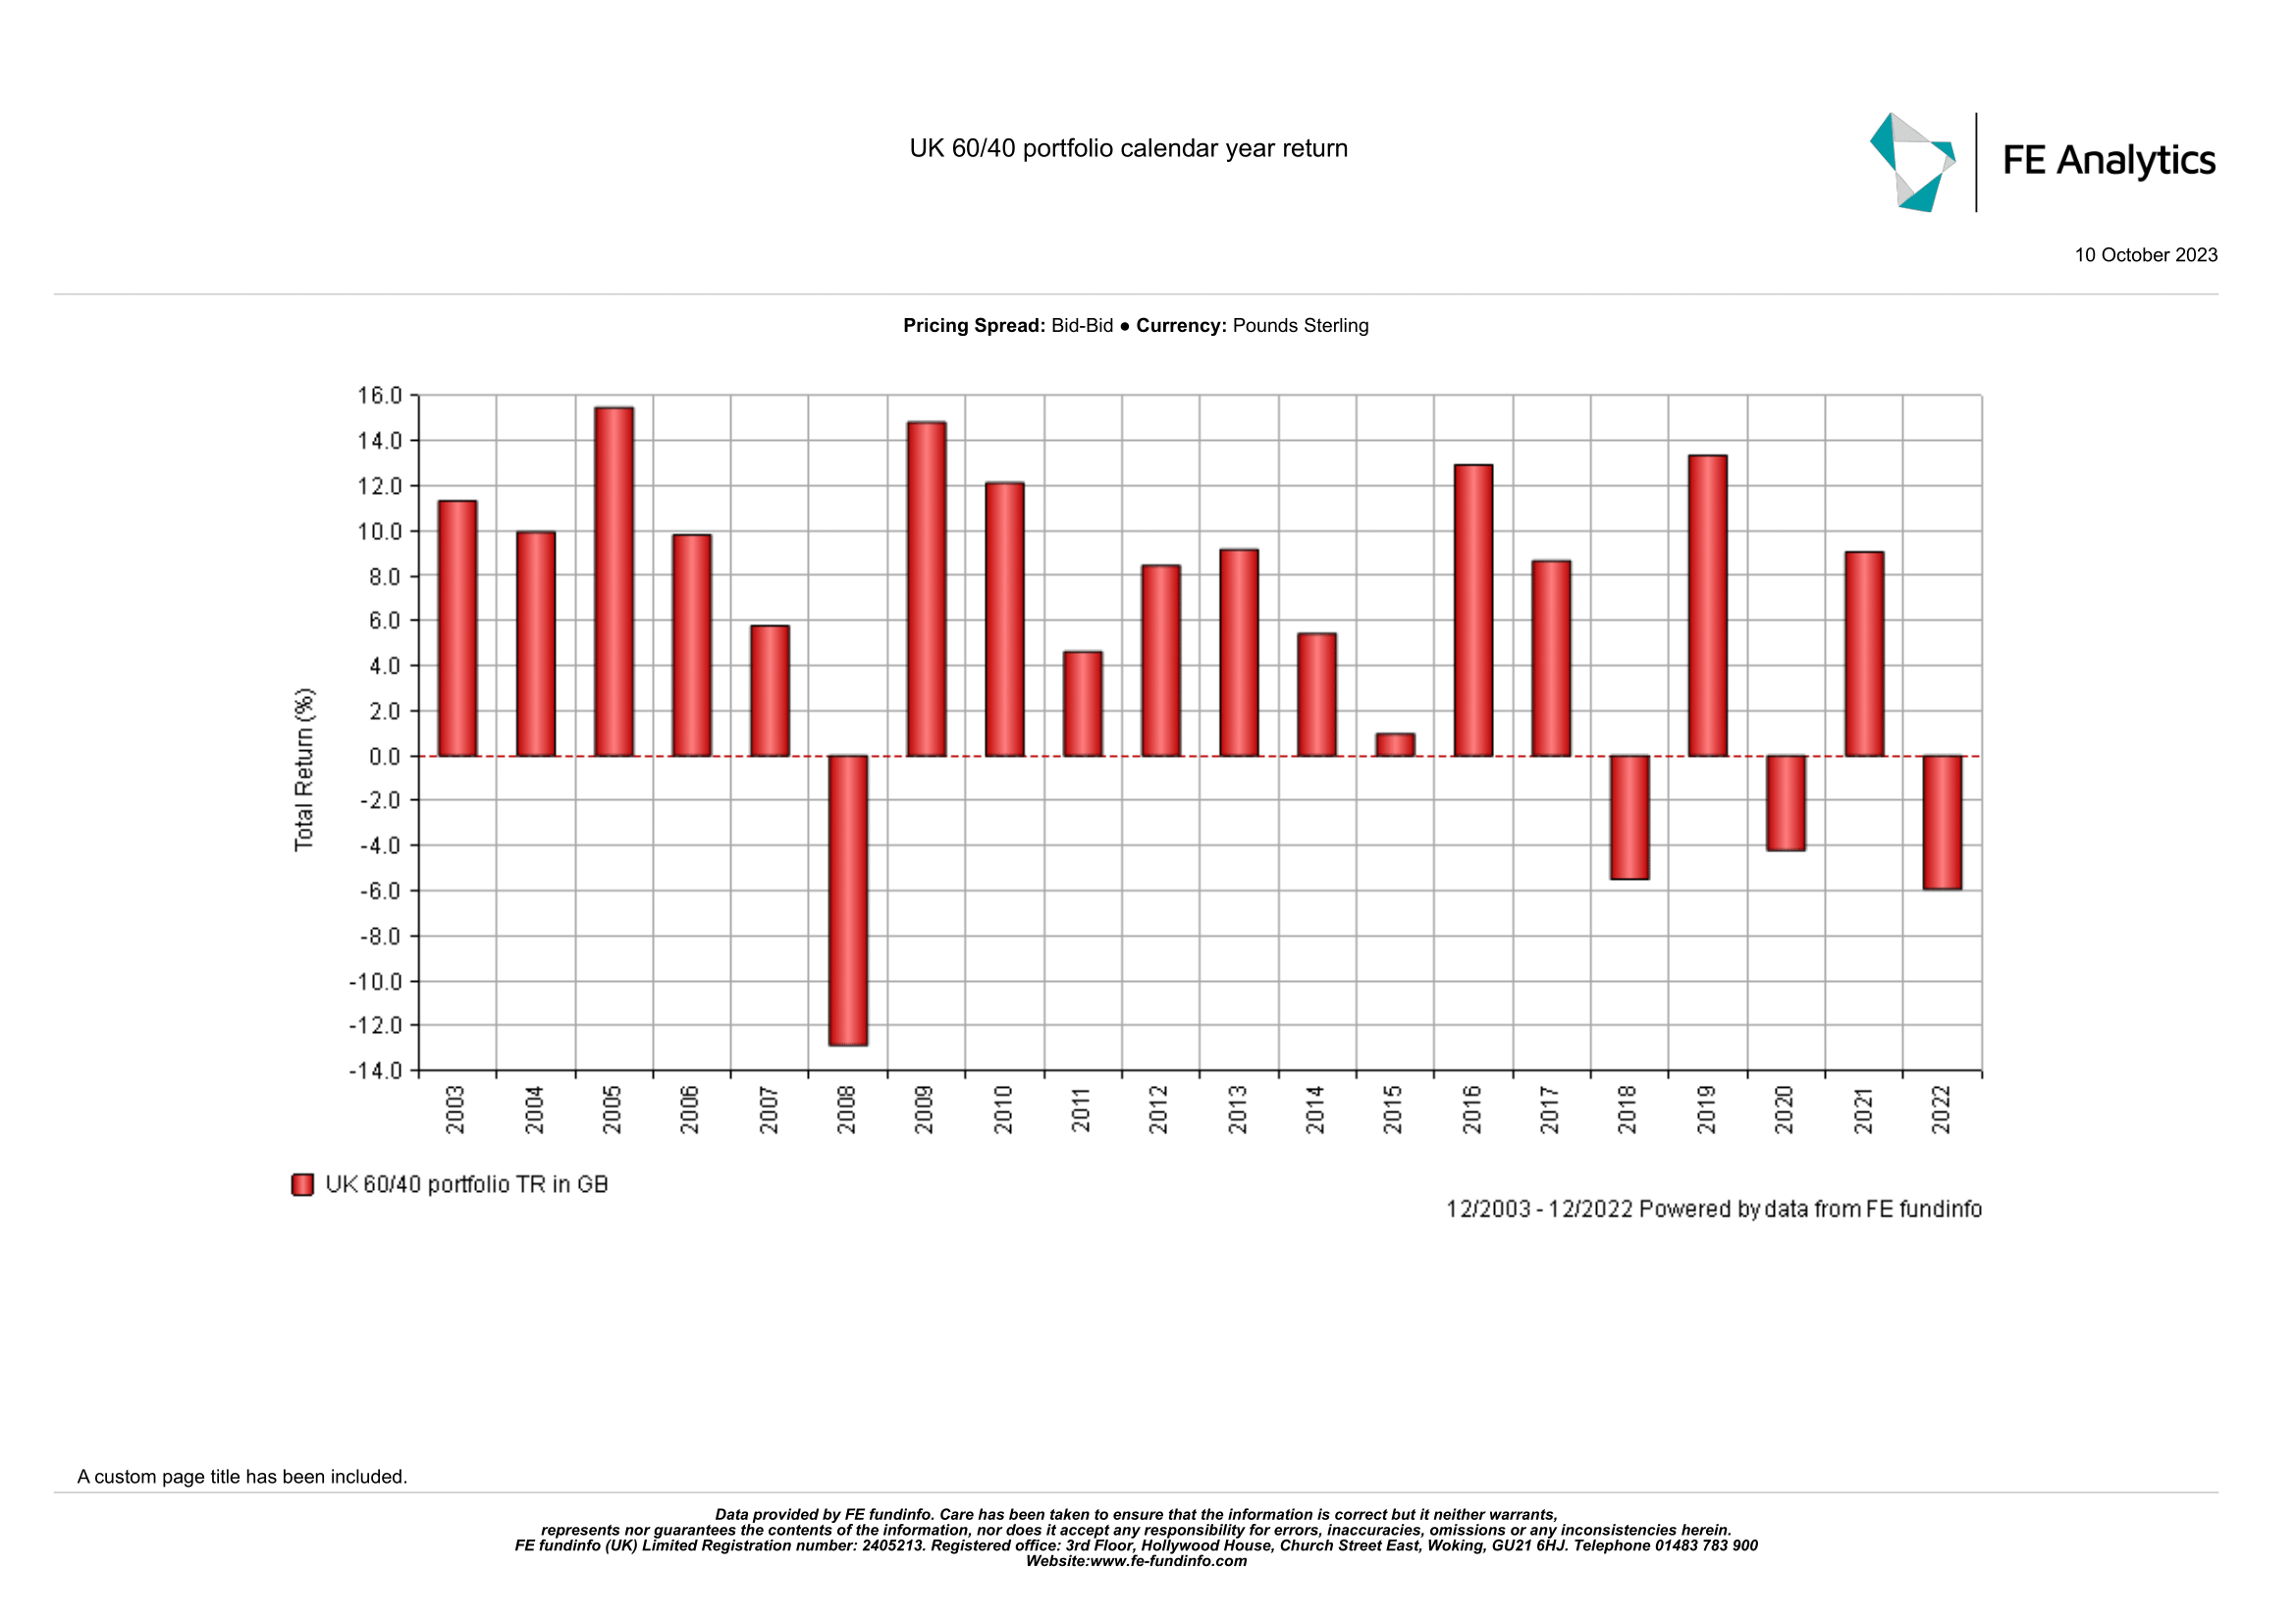 Financial graph covering a portfolio calendar year return.